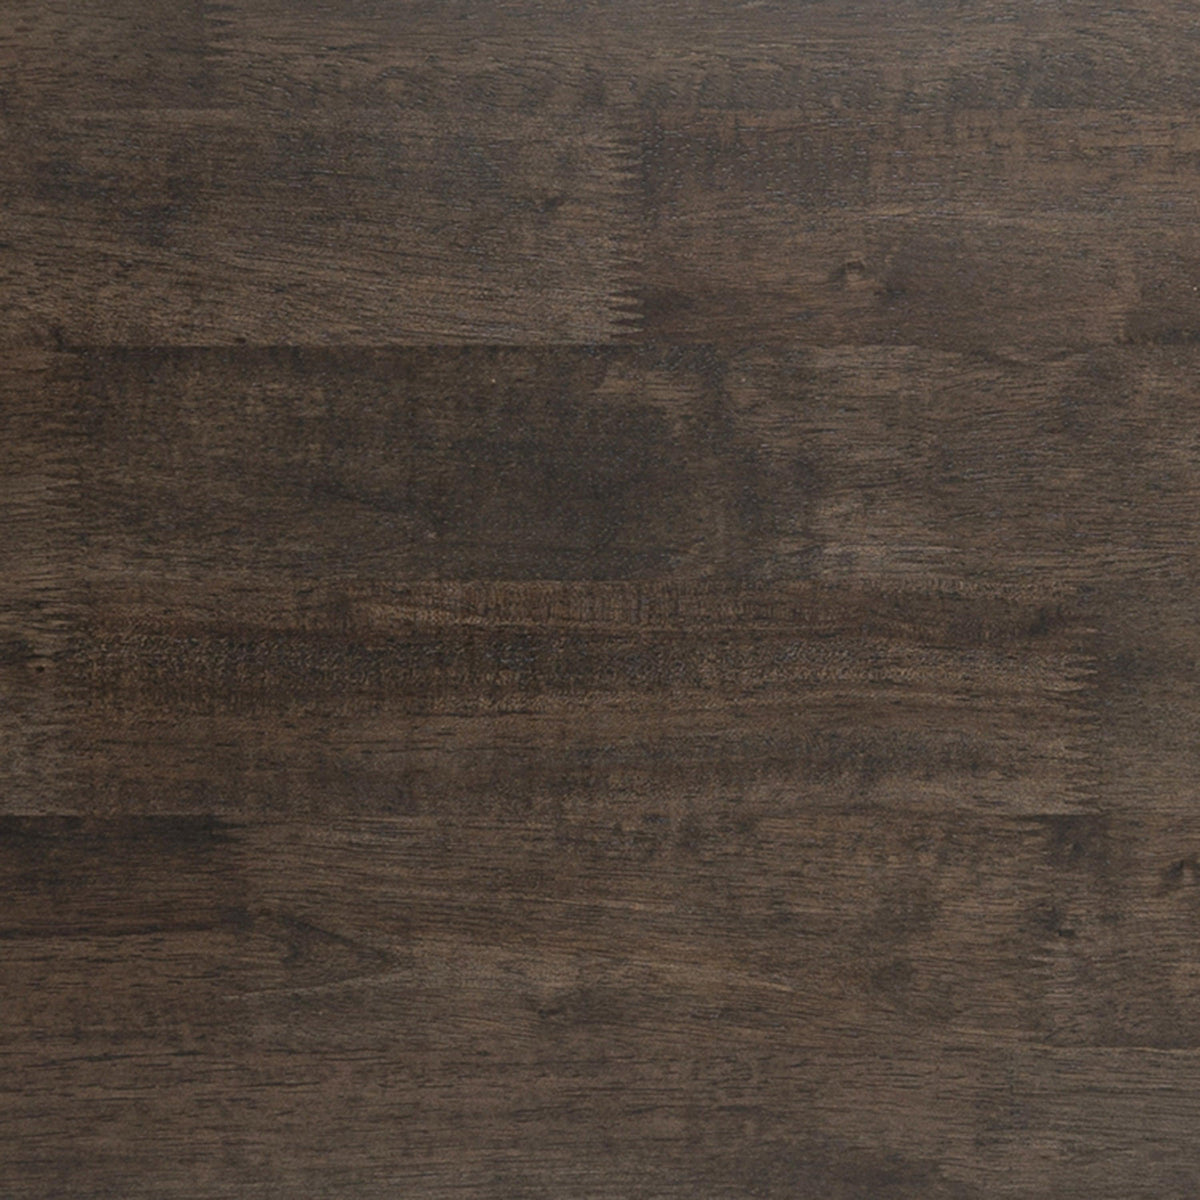 Dark Gray |#| Solid Wood Traditional Farmhouse Coffee Table in Dark Gray